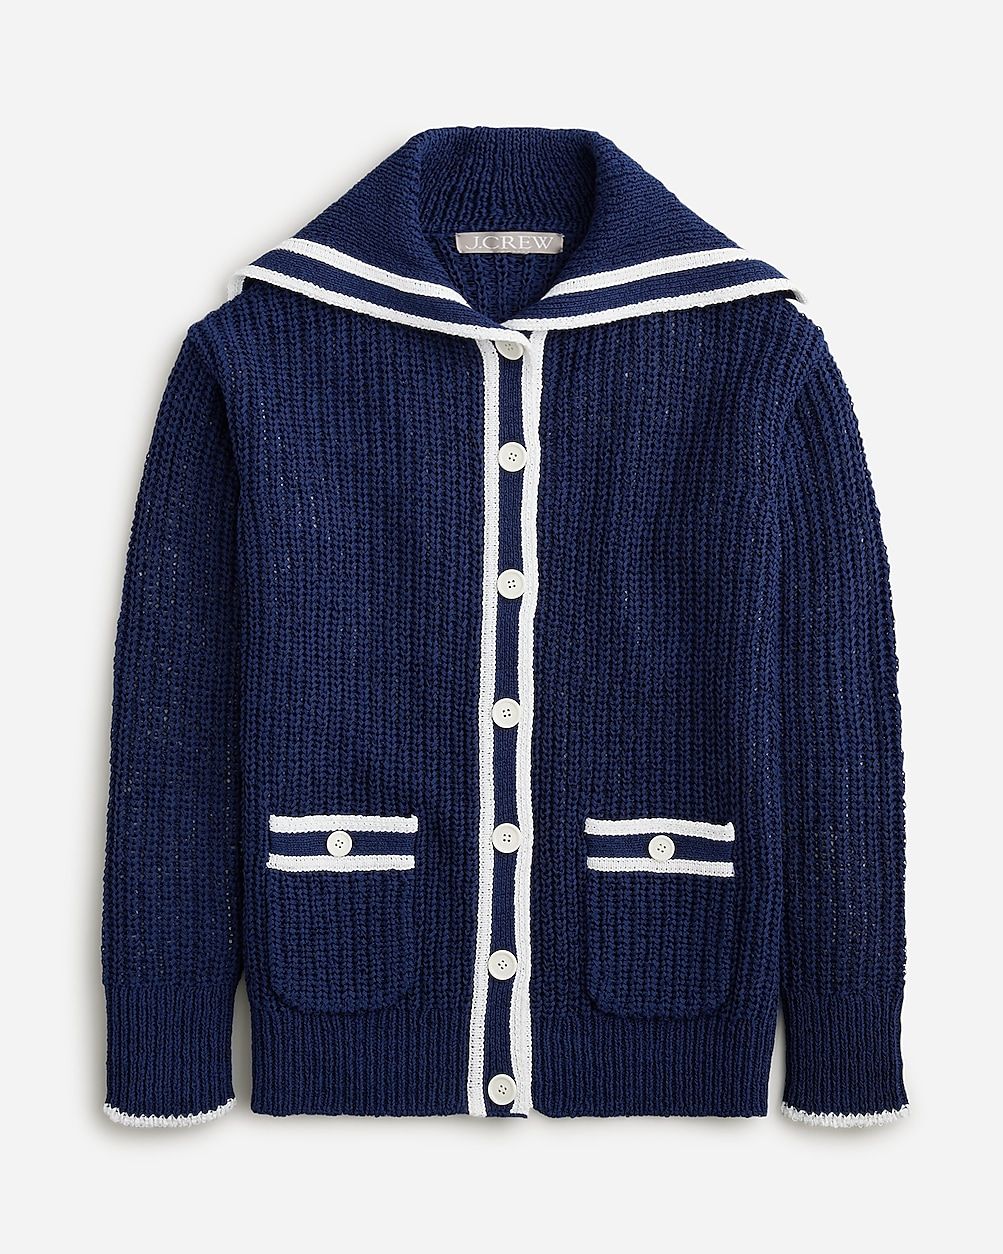 newTextured sailor cardigan sweater$158.00Dark Evening WhiteSelect a sizeSize & Fit InformationVi... | J.Crew US